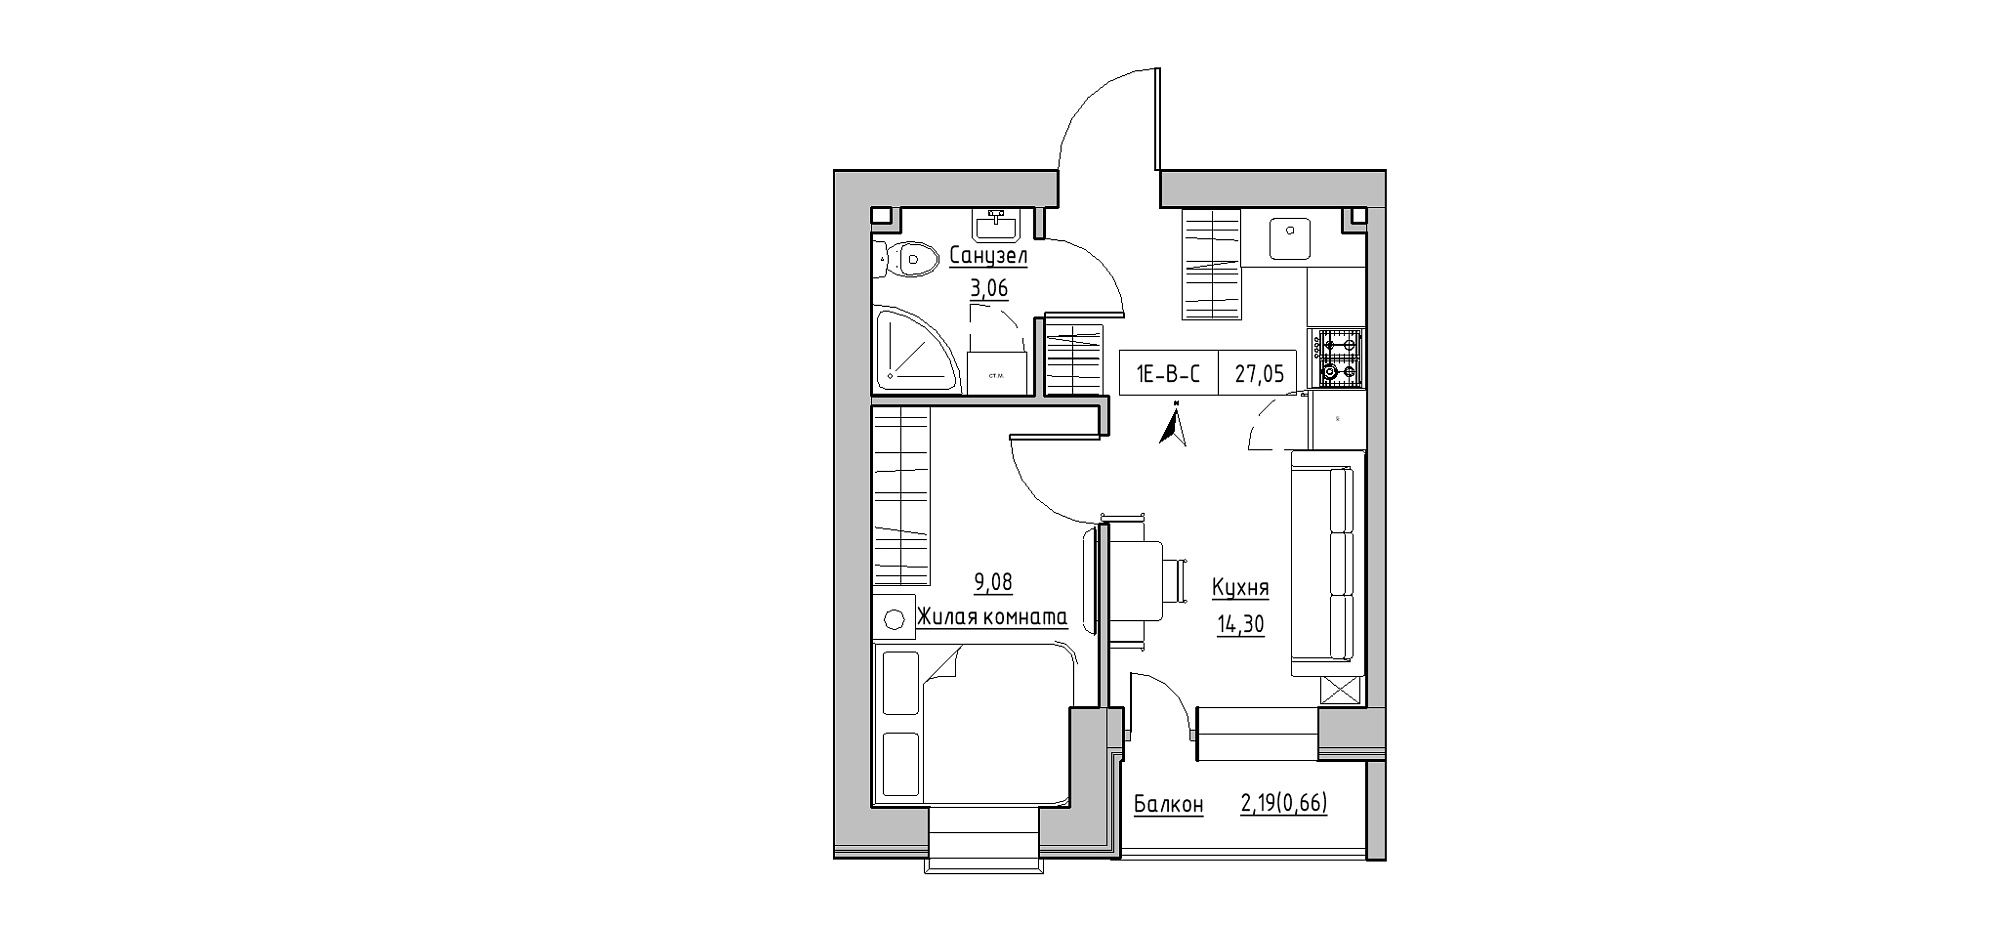 Planning 1-rm flats area 27.05m2, KS-020-05/0008.